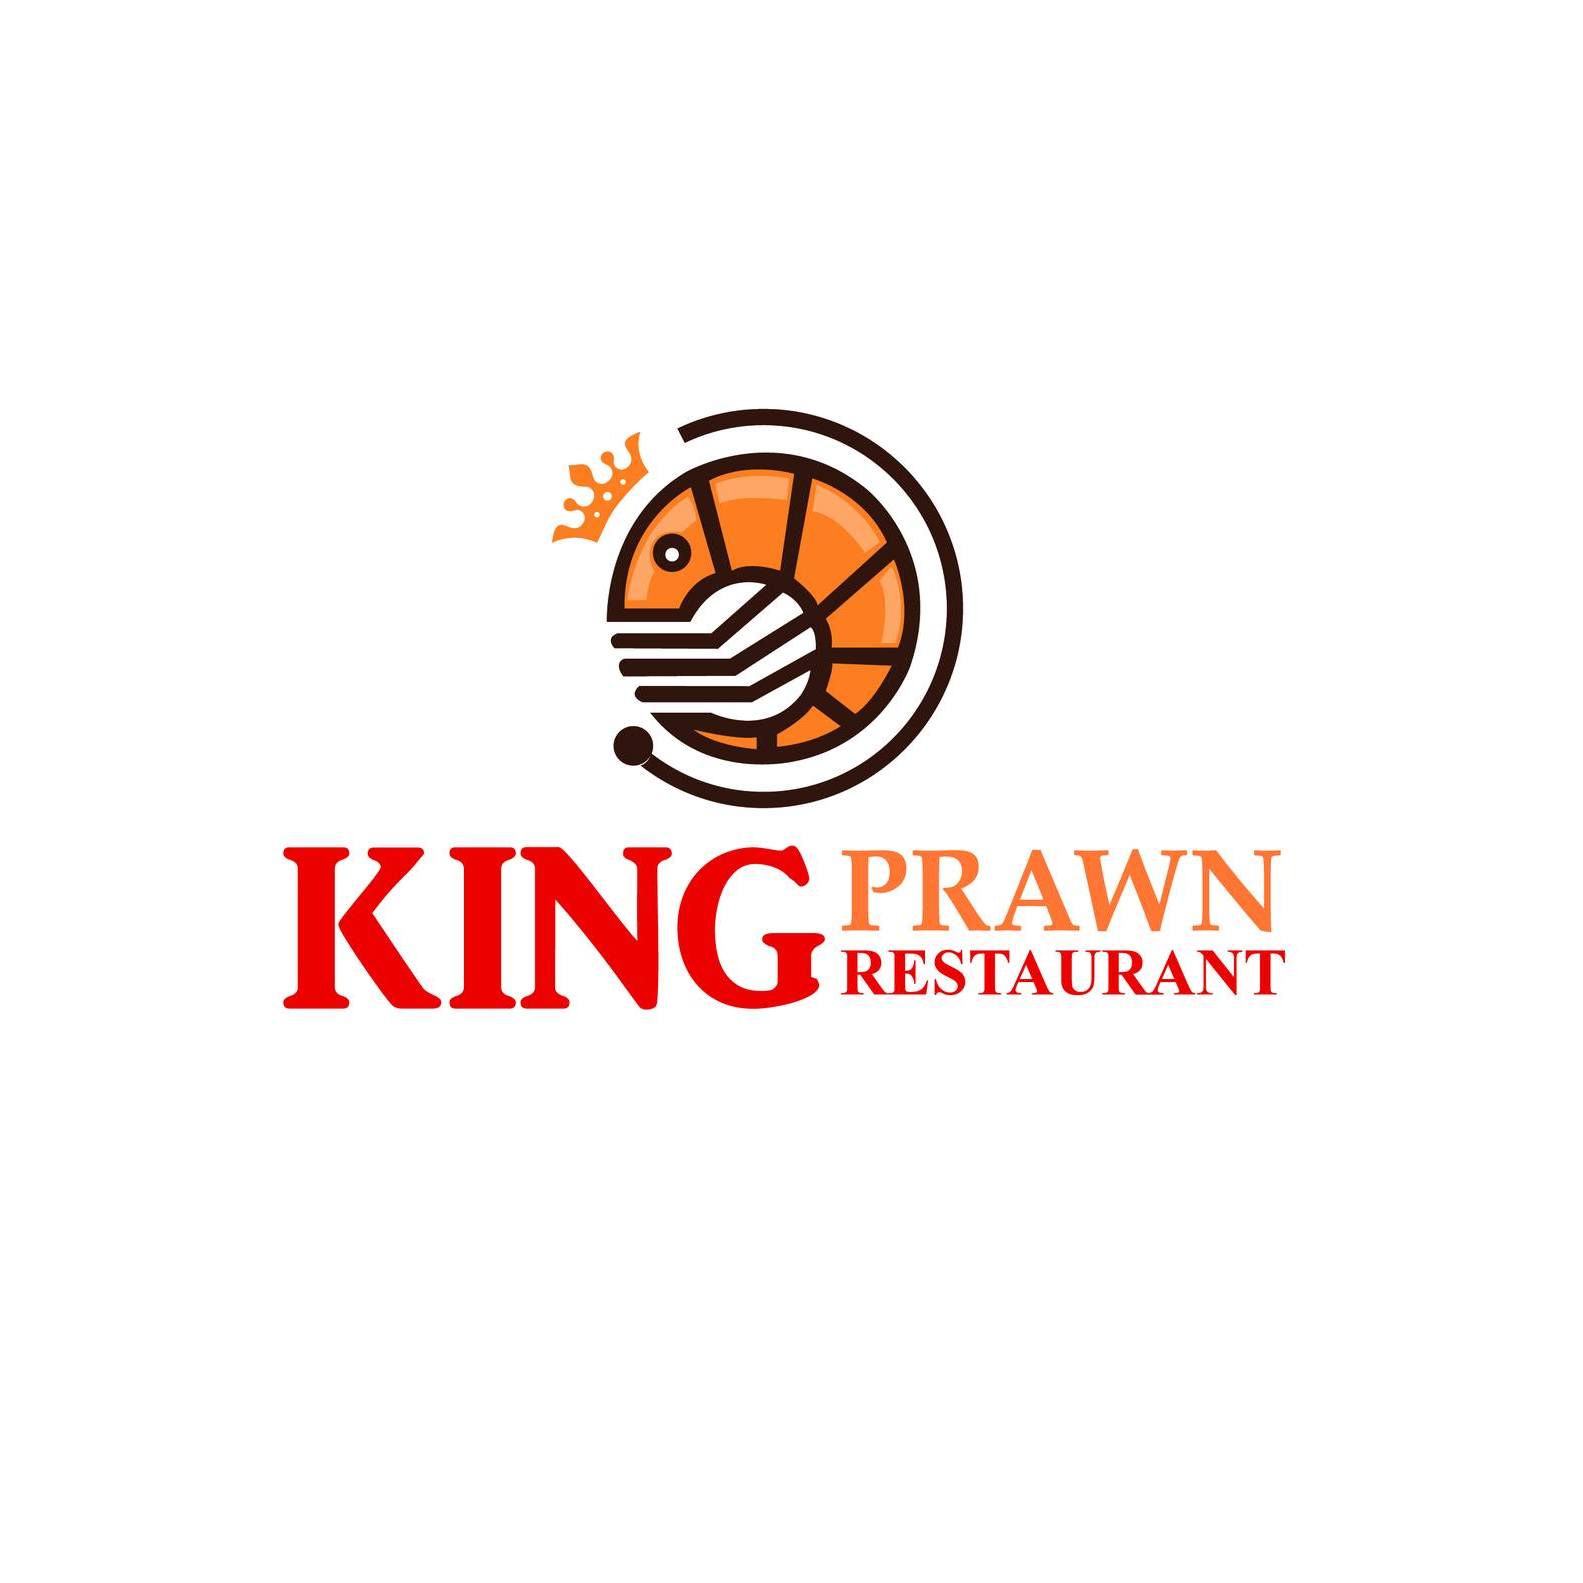 King Prawn Restaurant